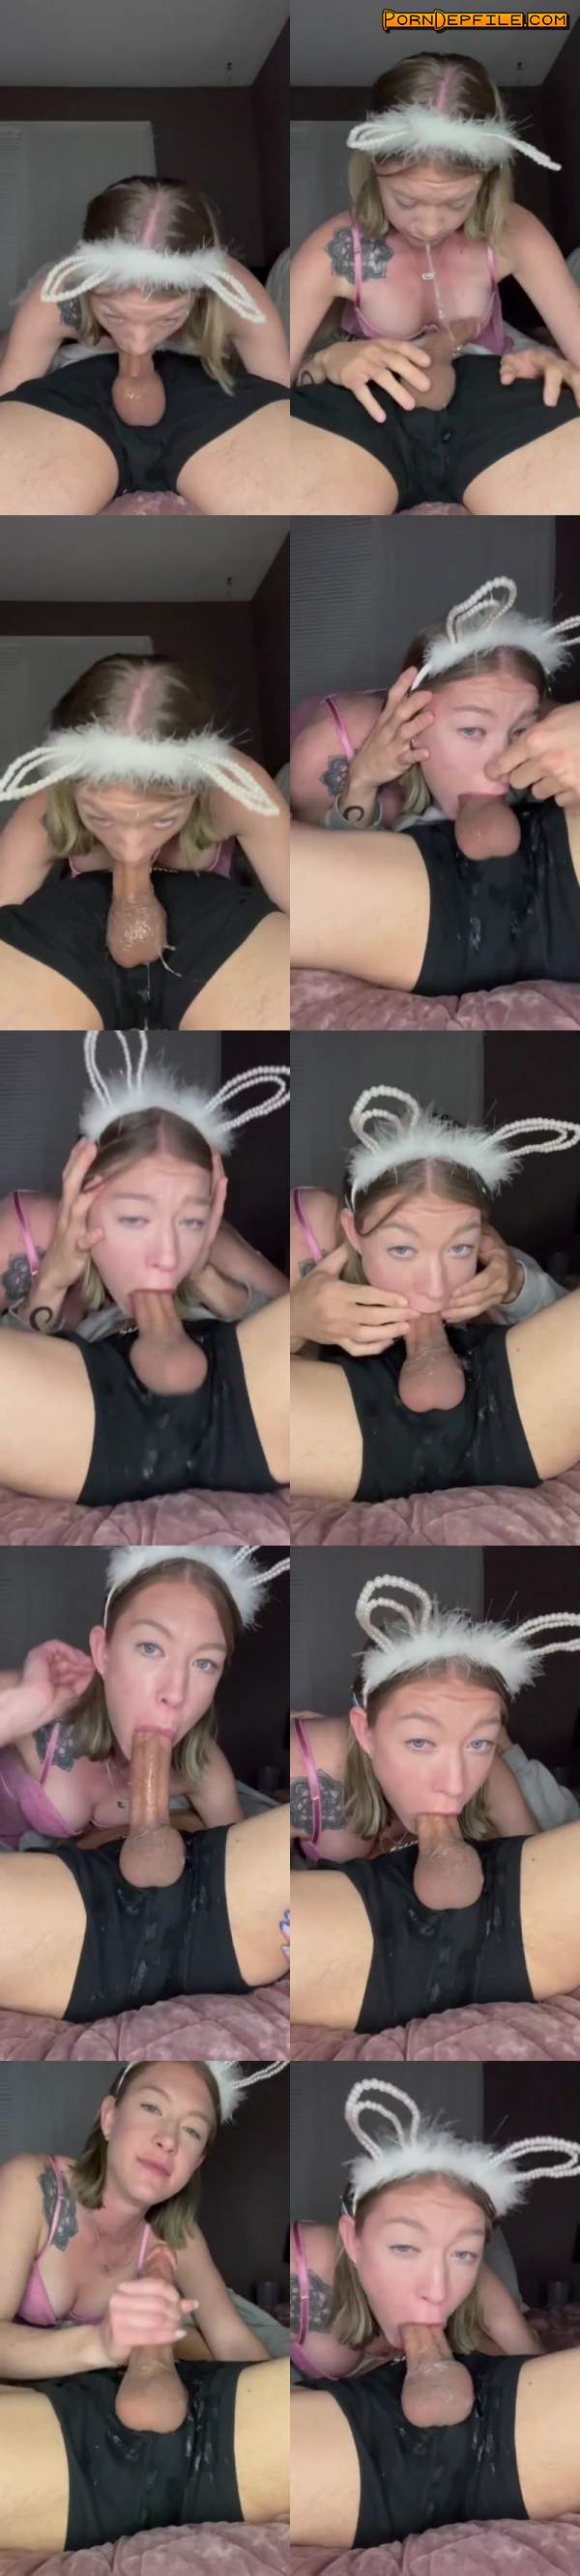 Pornhub, LakinDayXO: Bunny Rabbit Cosplay Slut Gets Face Fucked Balls Deep By Big Cock + Sloppy Throatpie! (Handjob, Deep Throat, Asian, Amateur) 720p